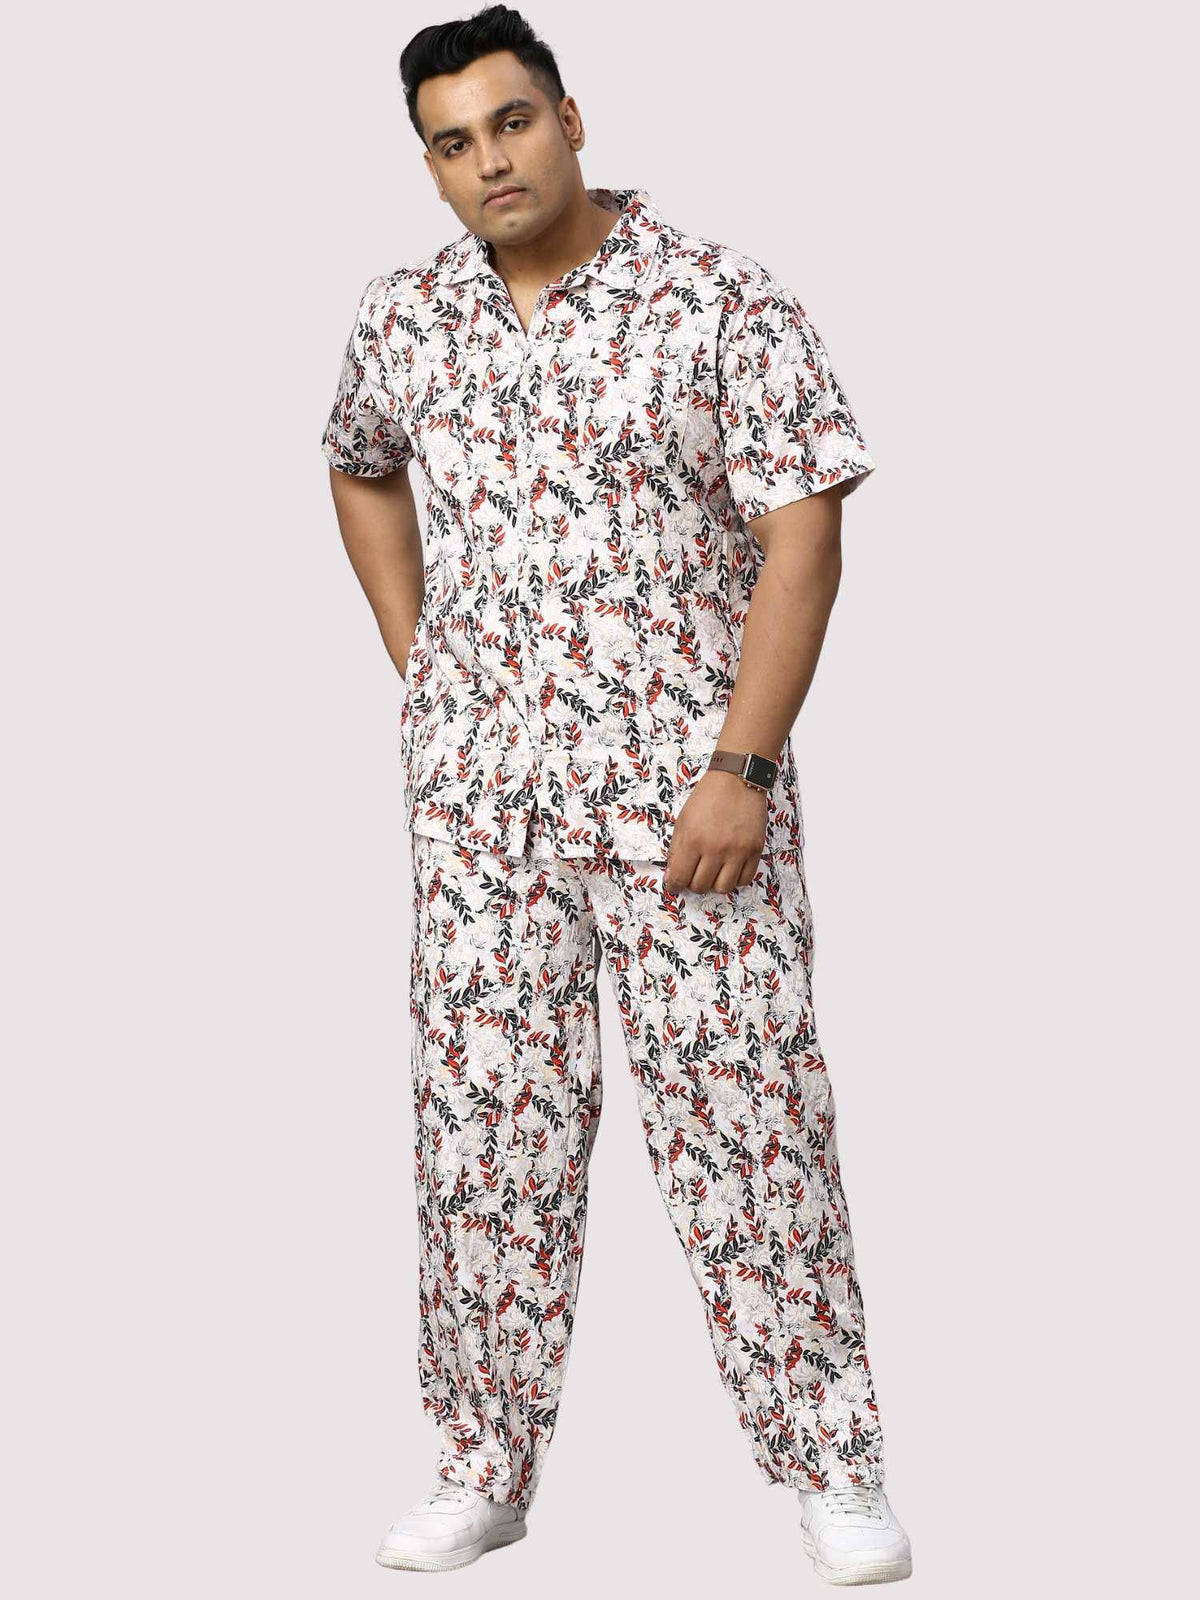 Petal Wand Digital Printed Full Co-Ords Men's Plus Size - Guniaa Fashions